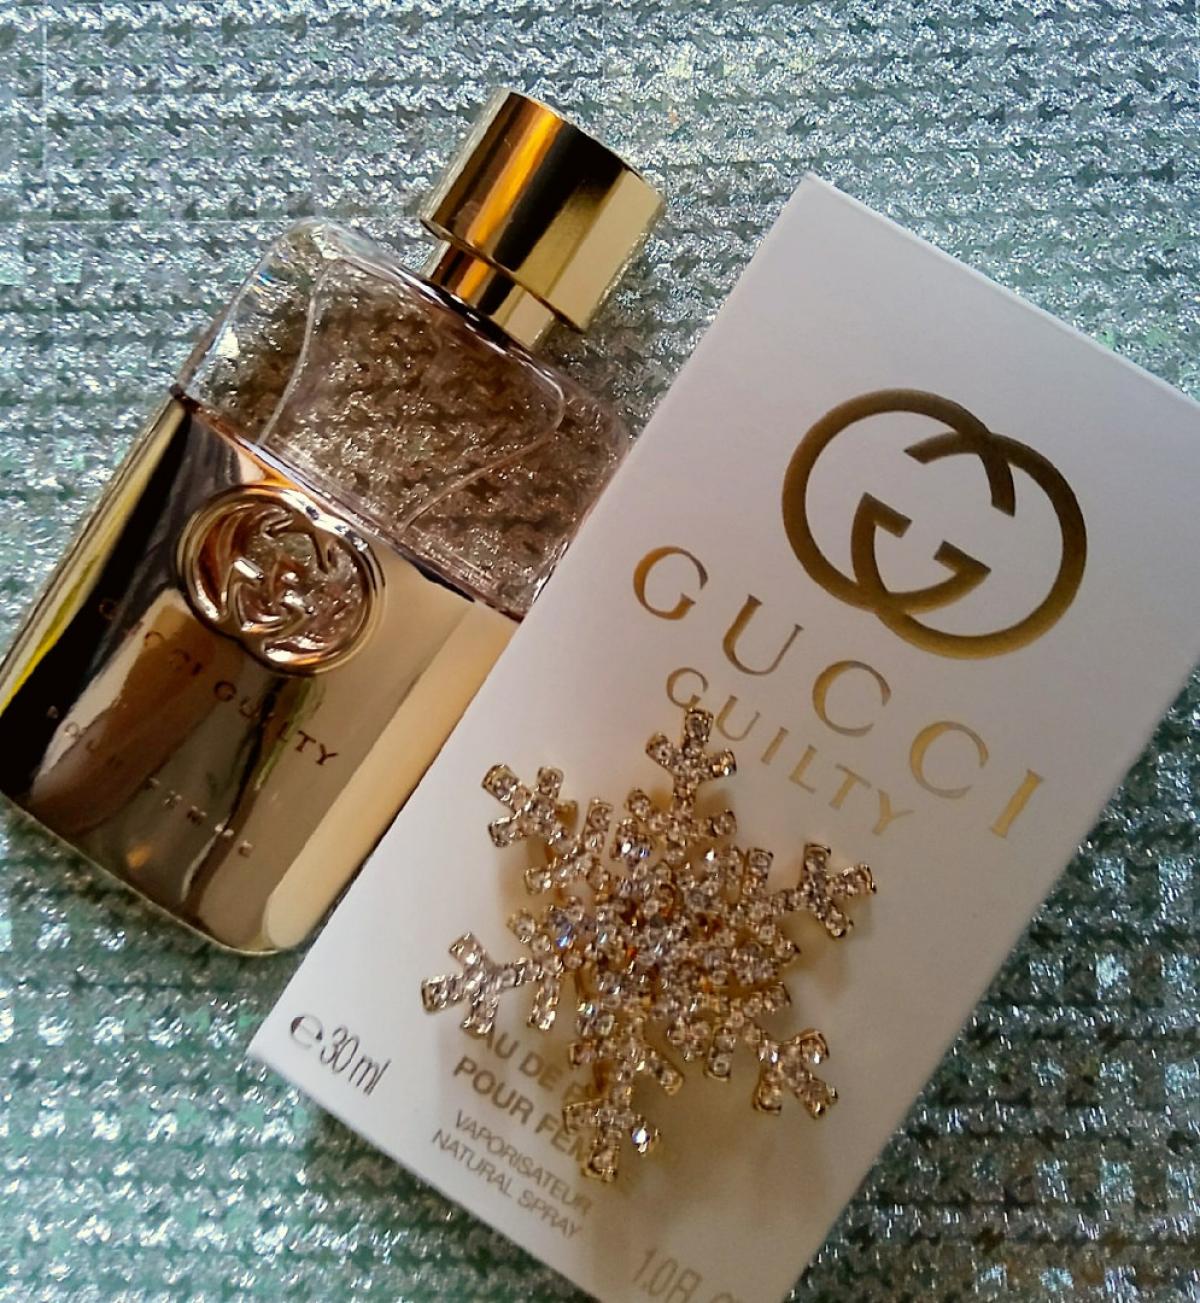 Parfum Gucci - Homecare24